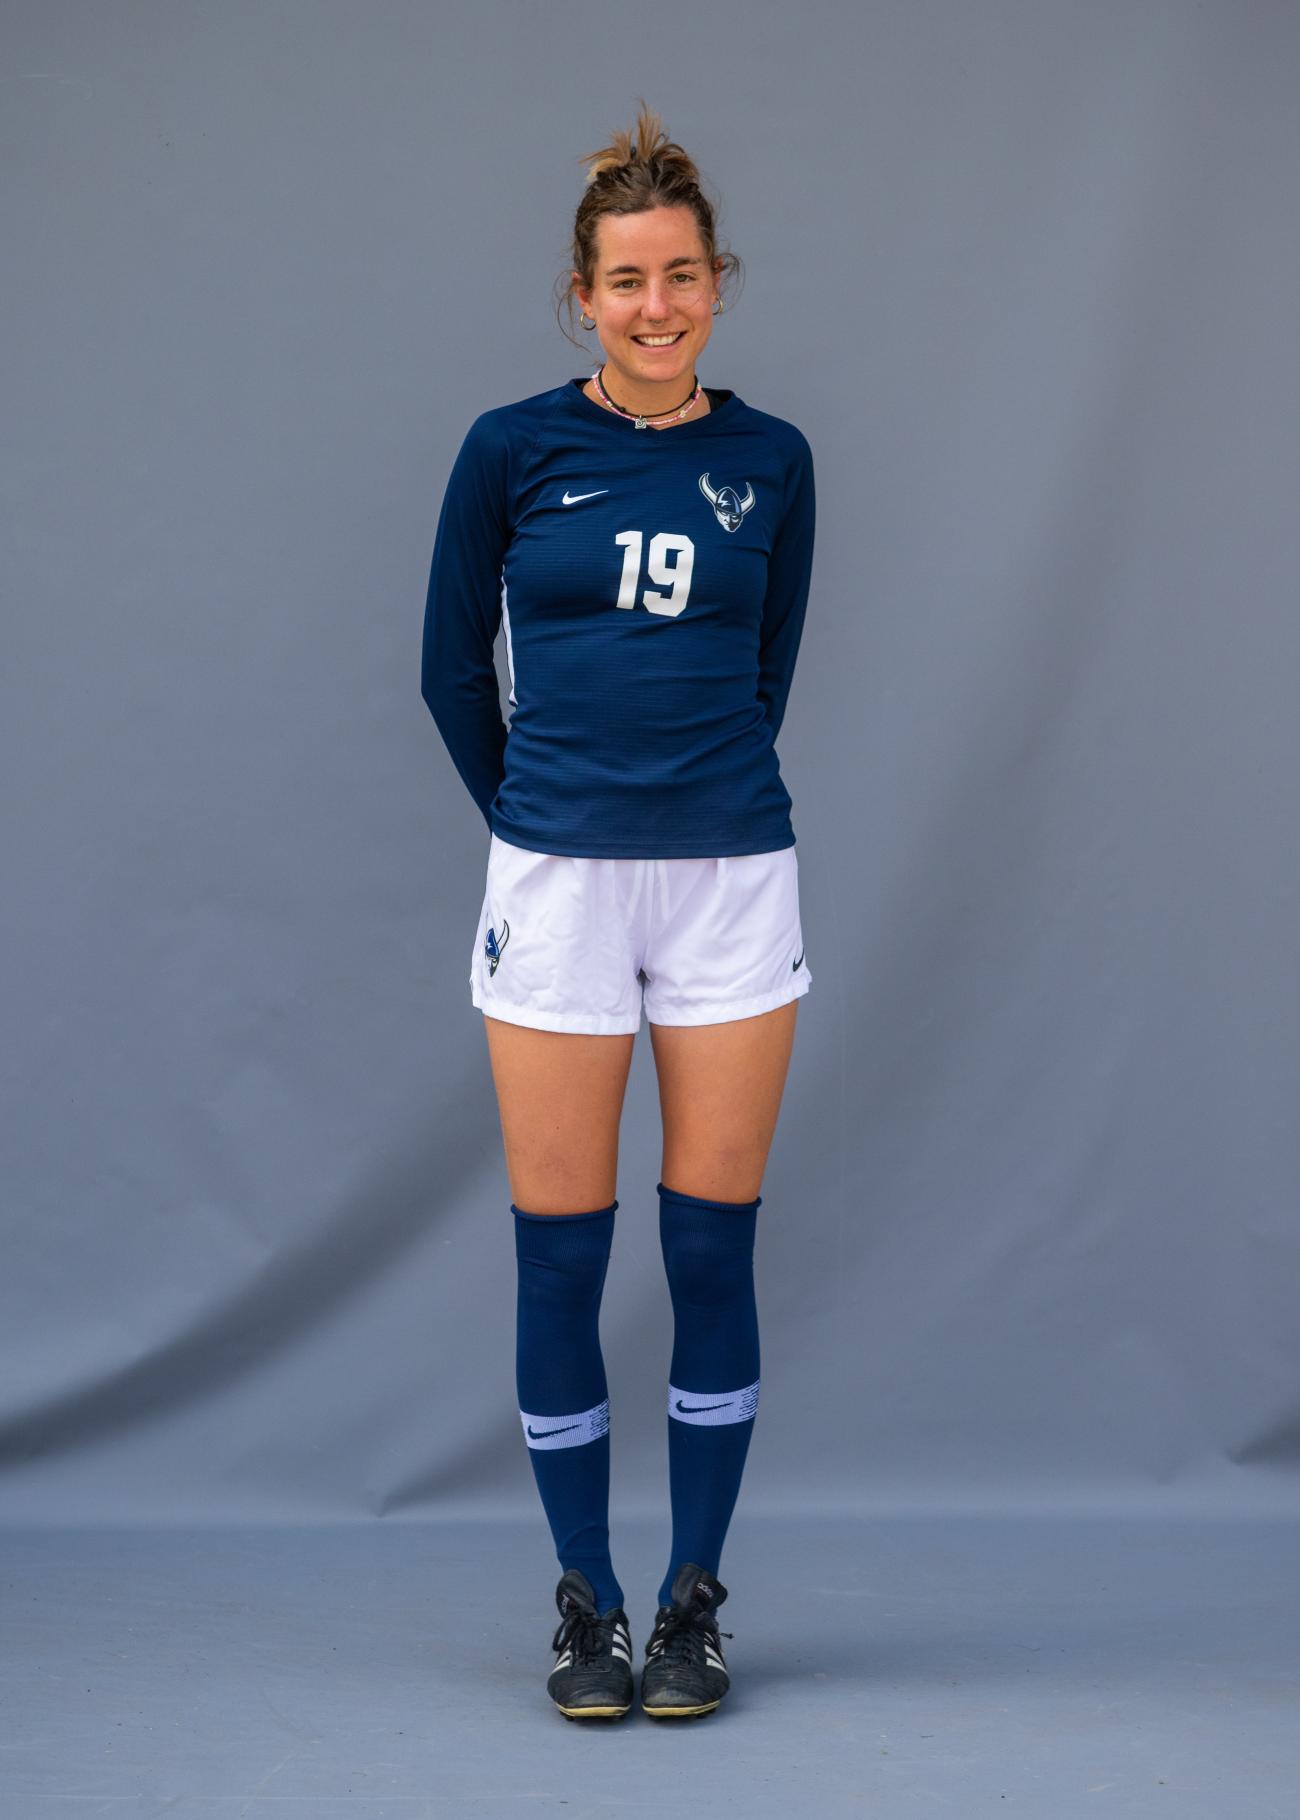 Tara Ziemer in their soccer uniform